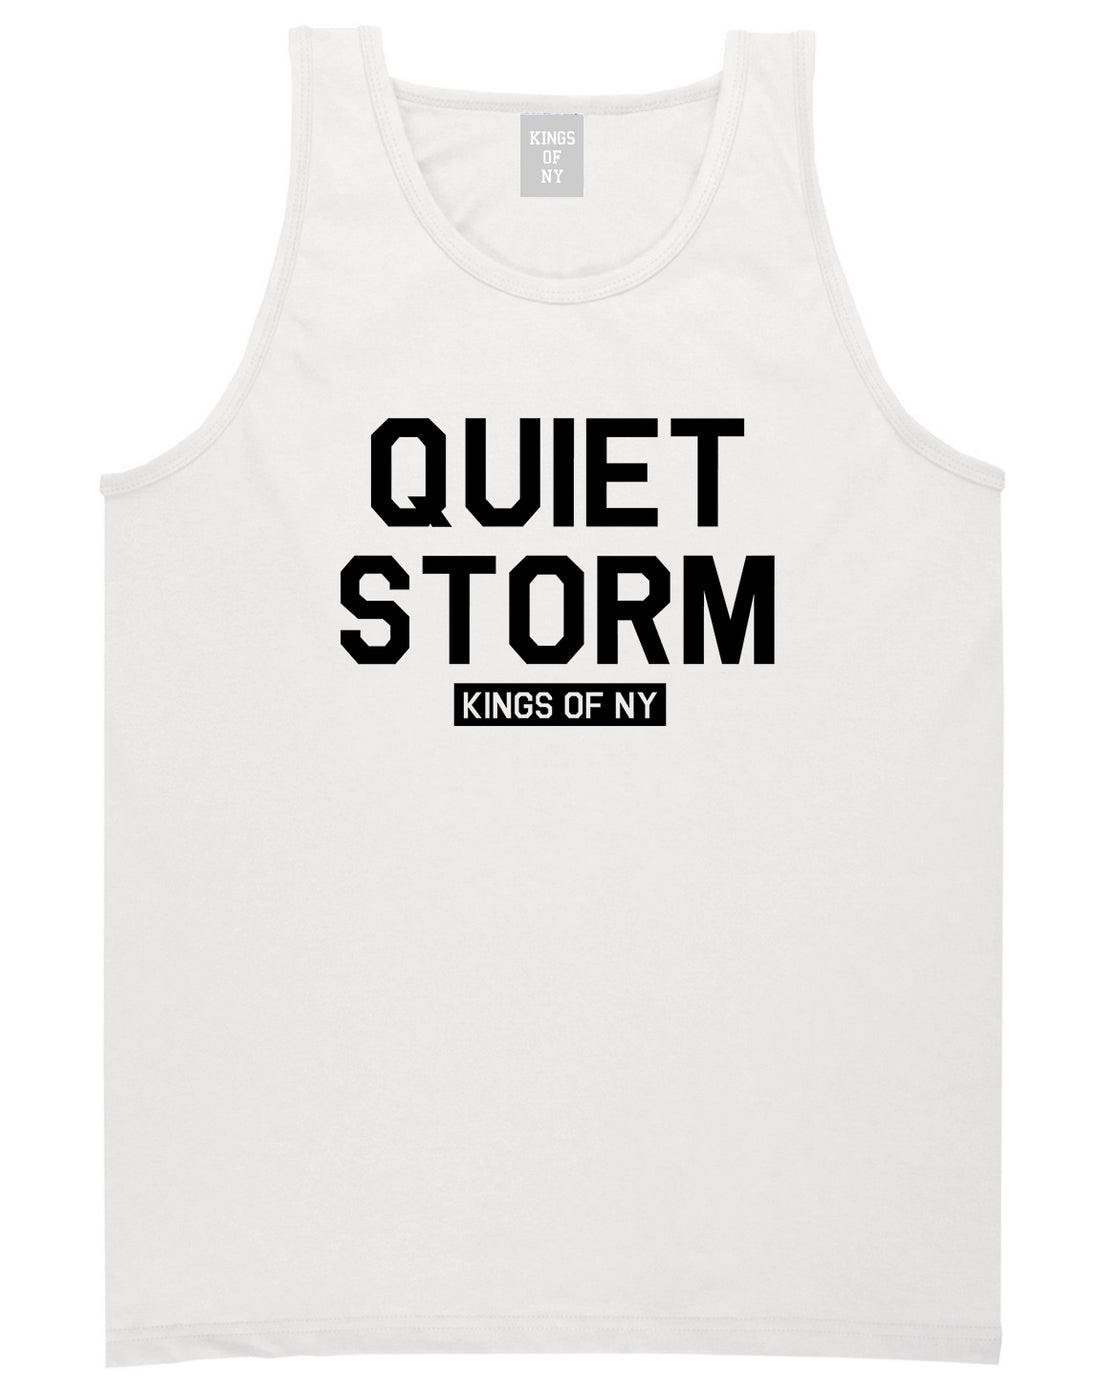 Quiet Storm Kings Of NY Mens Tank Top Shirt White